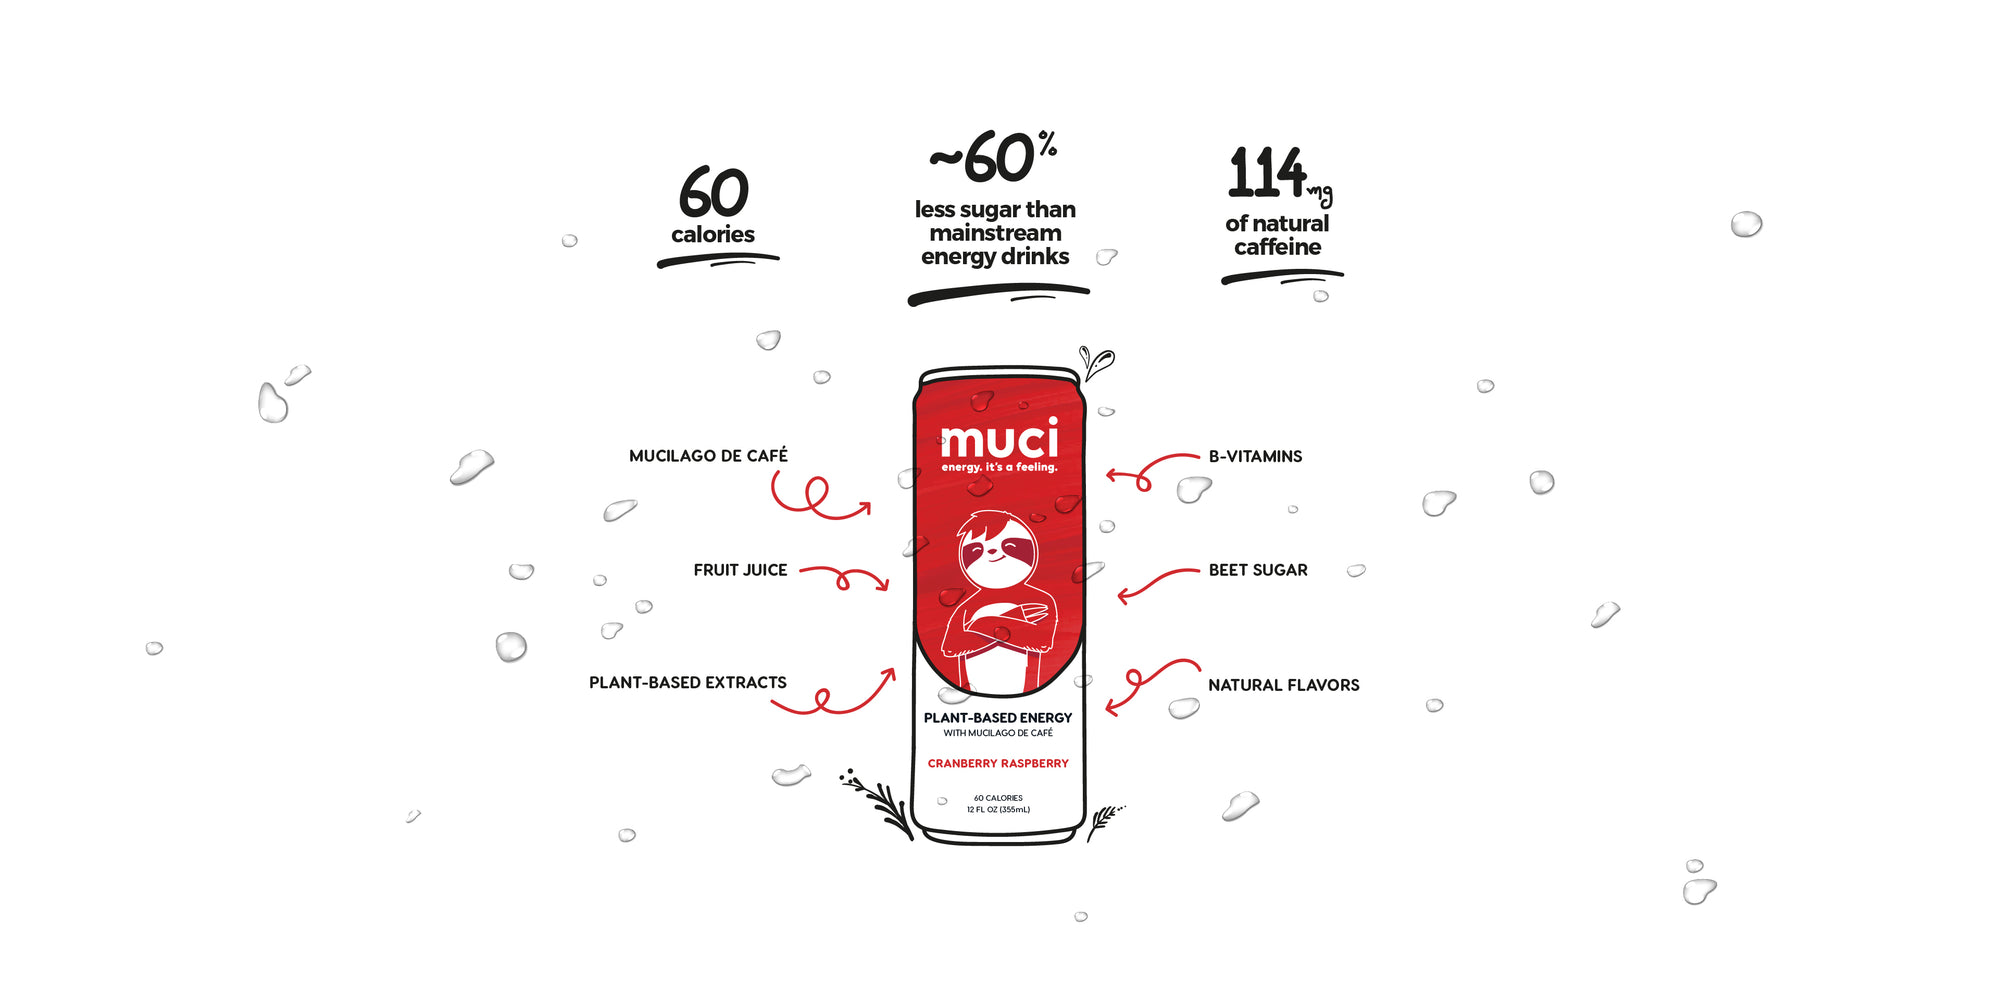 muci plant based energy drink